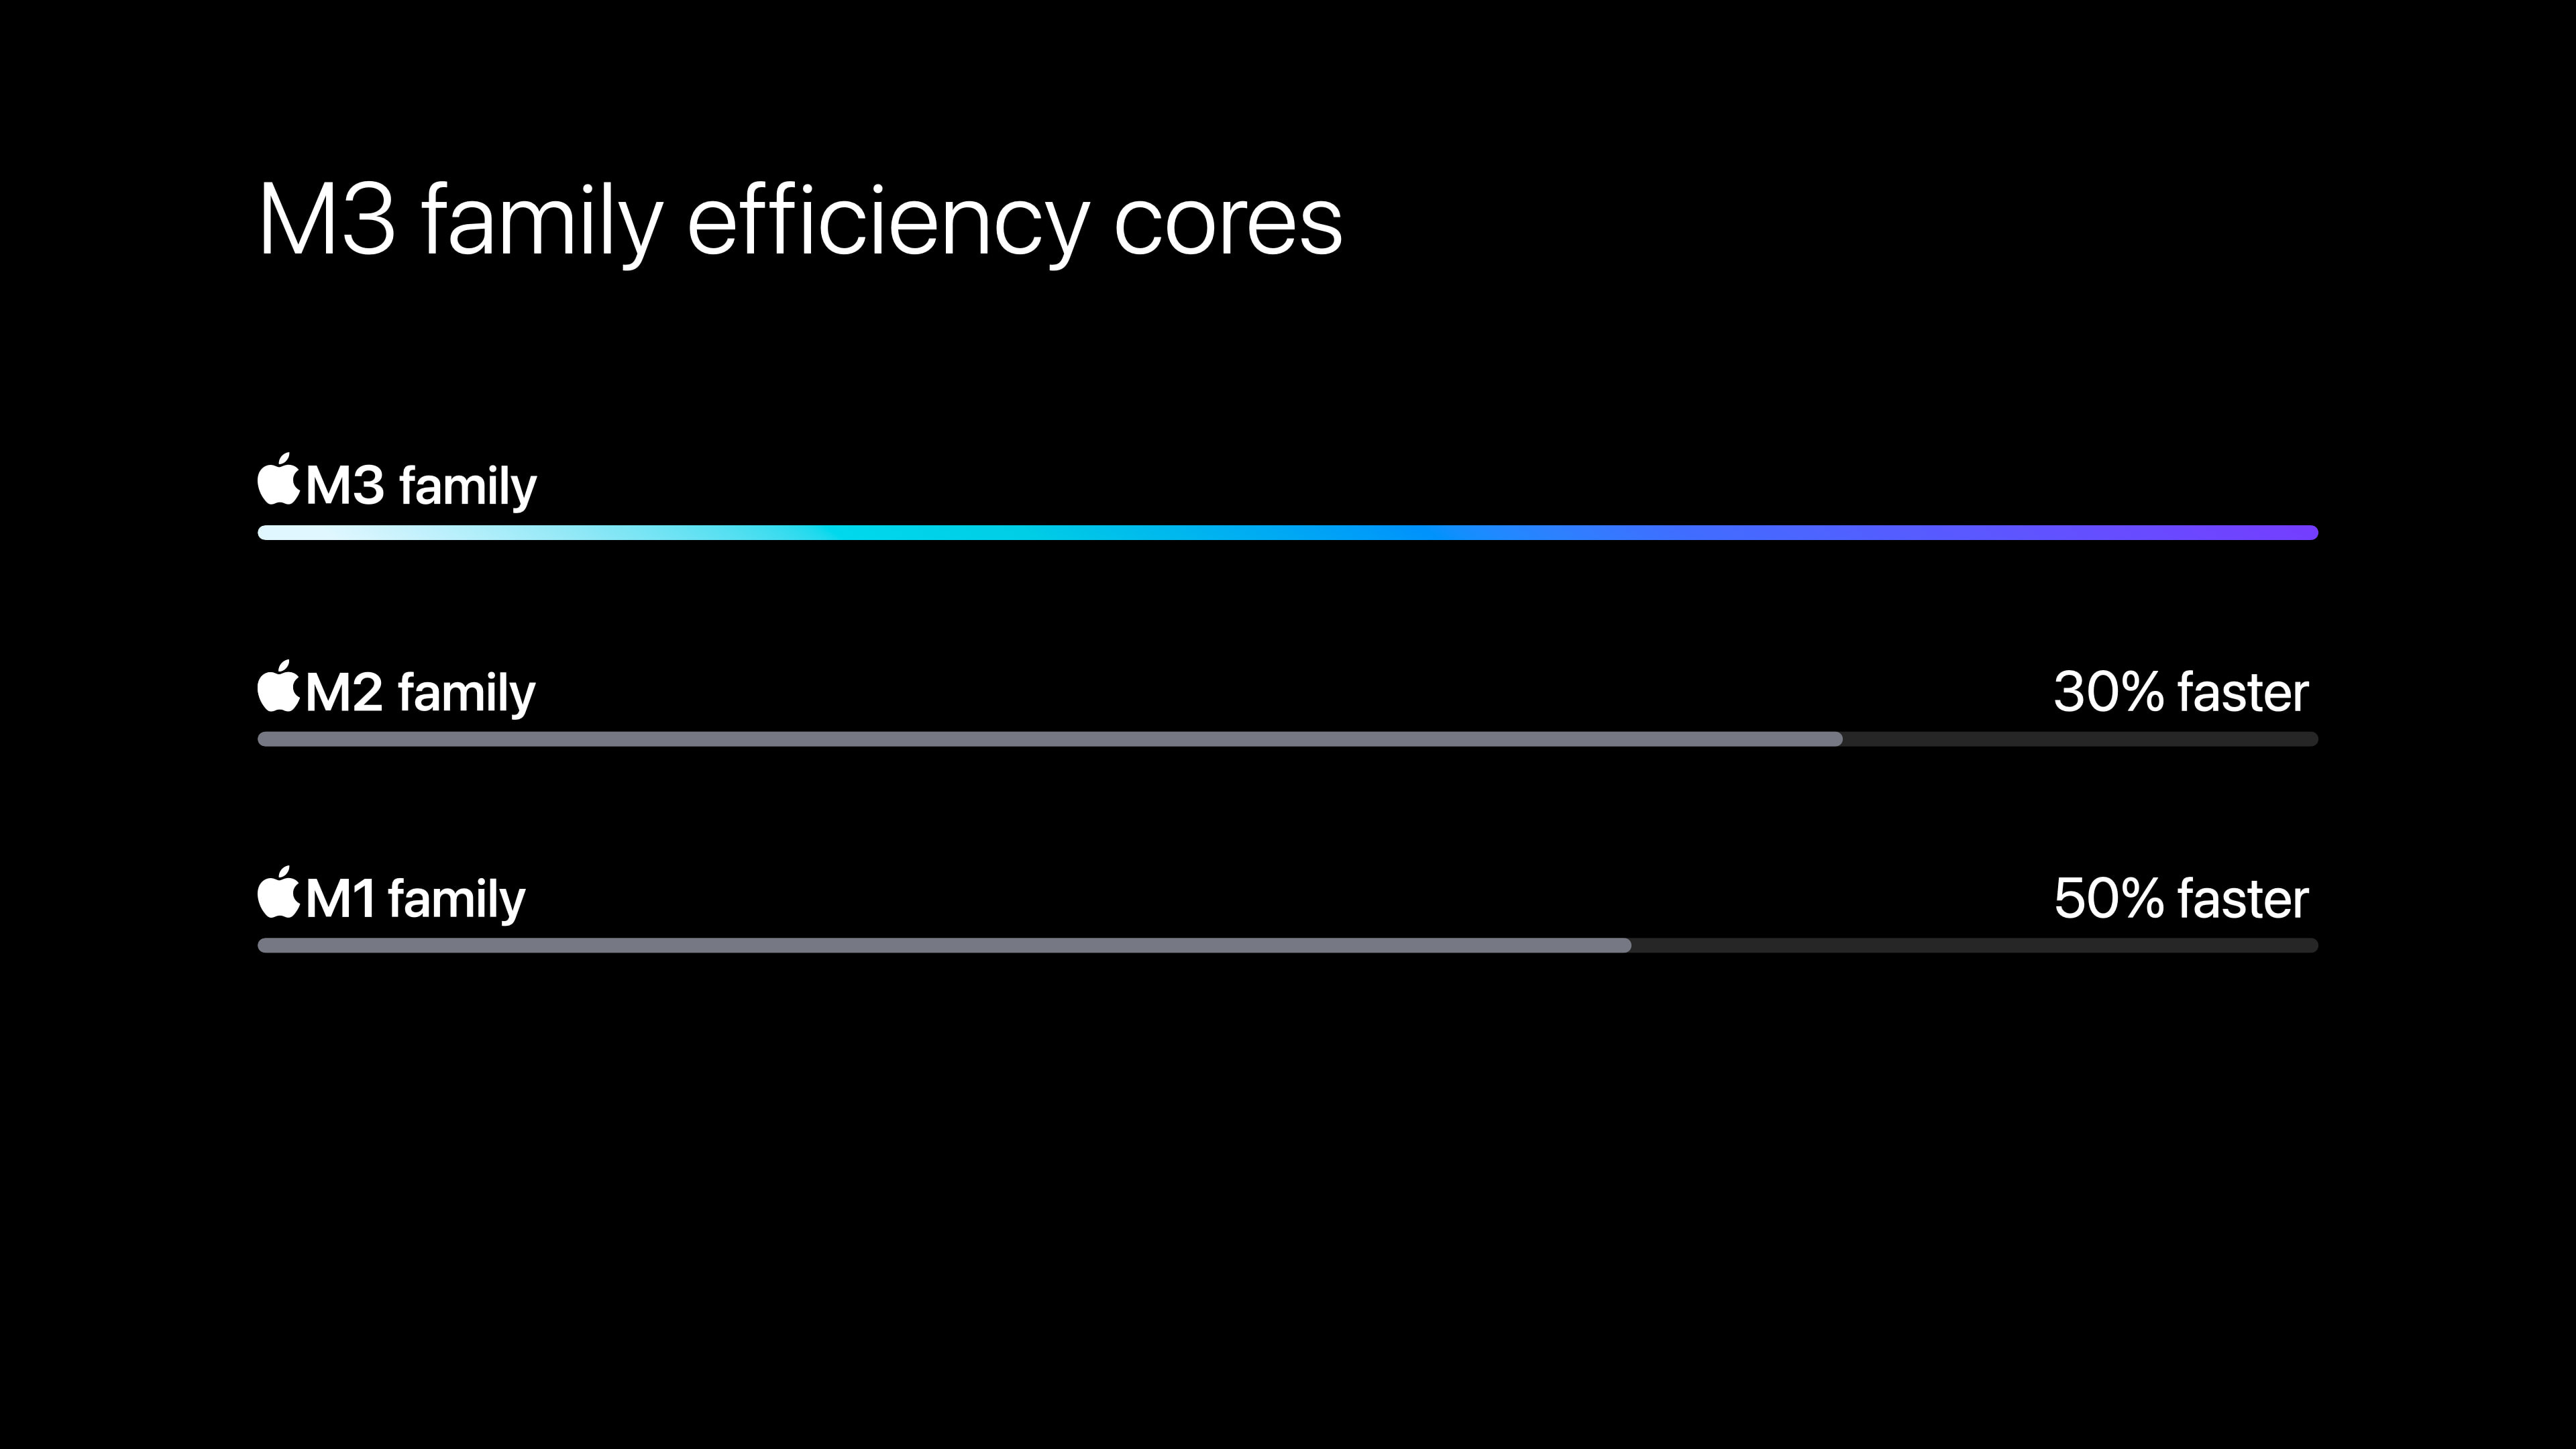 M3 family efficieny cores, Image: Apple